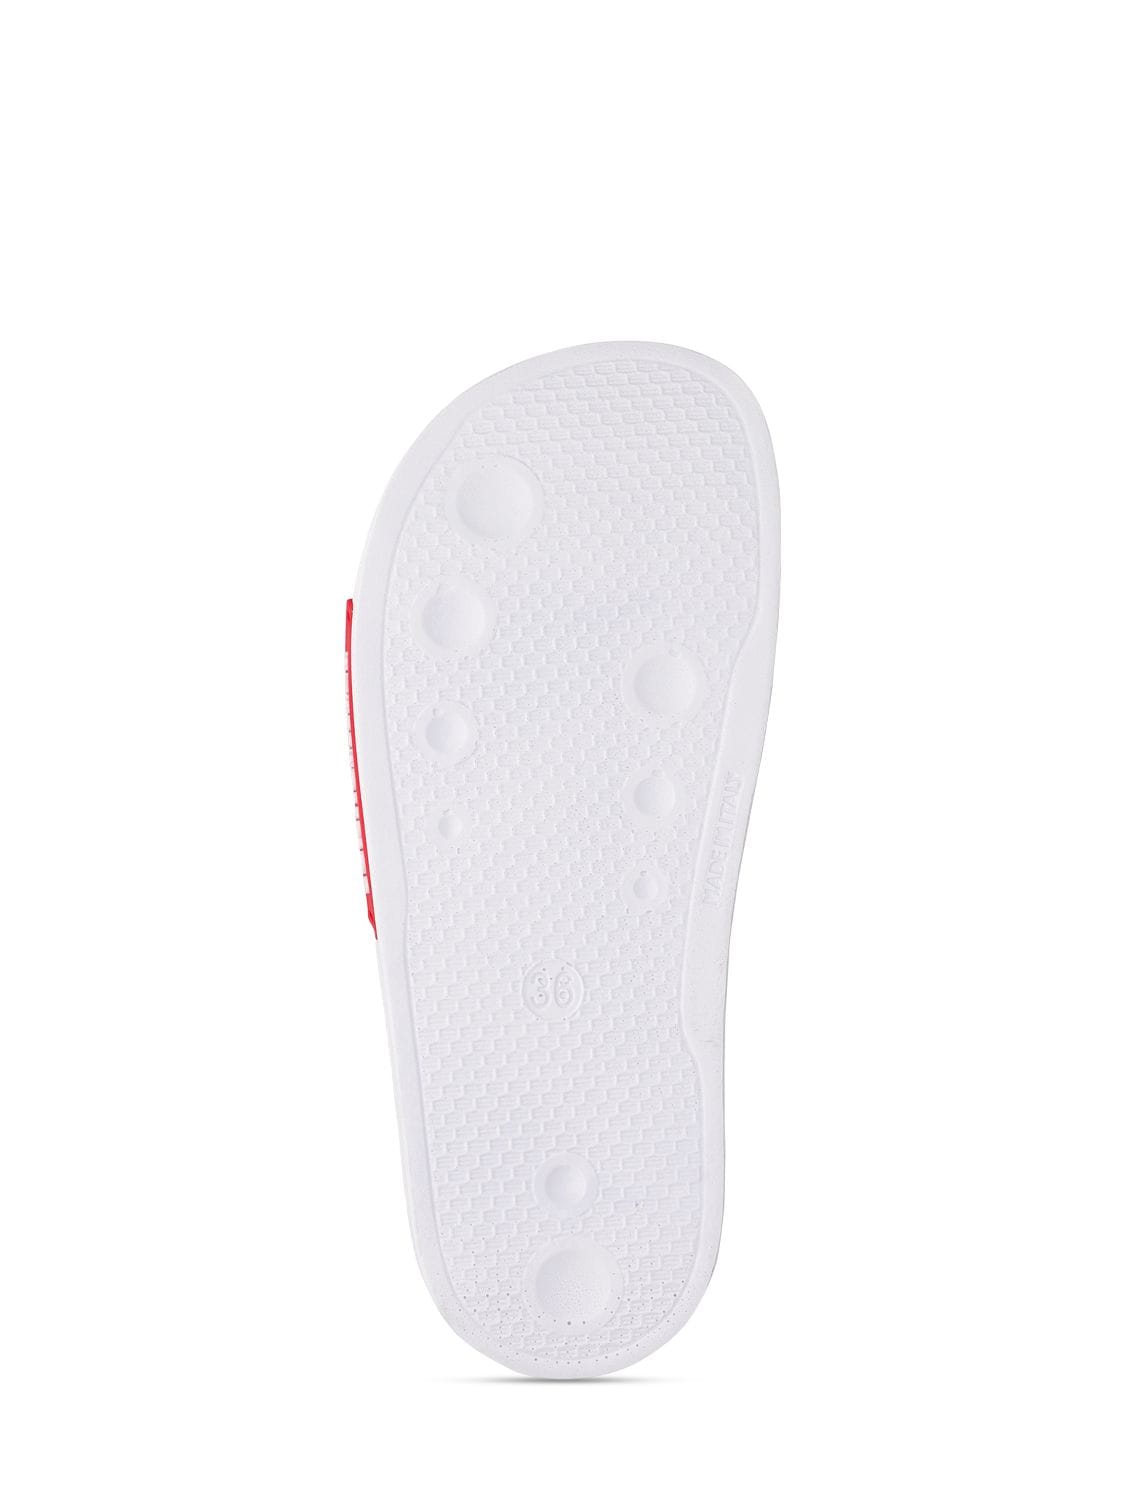 Shop Dolce & Gabbana Logo Rubber Slide Sandals In White,red